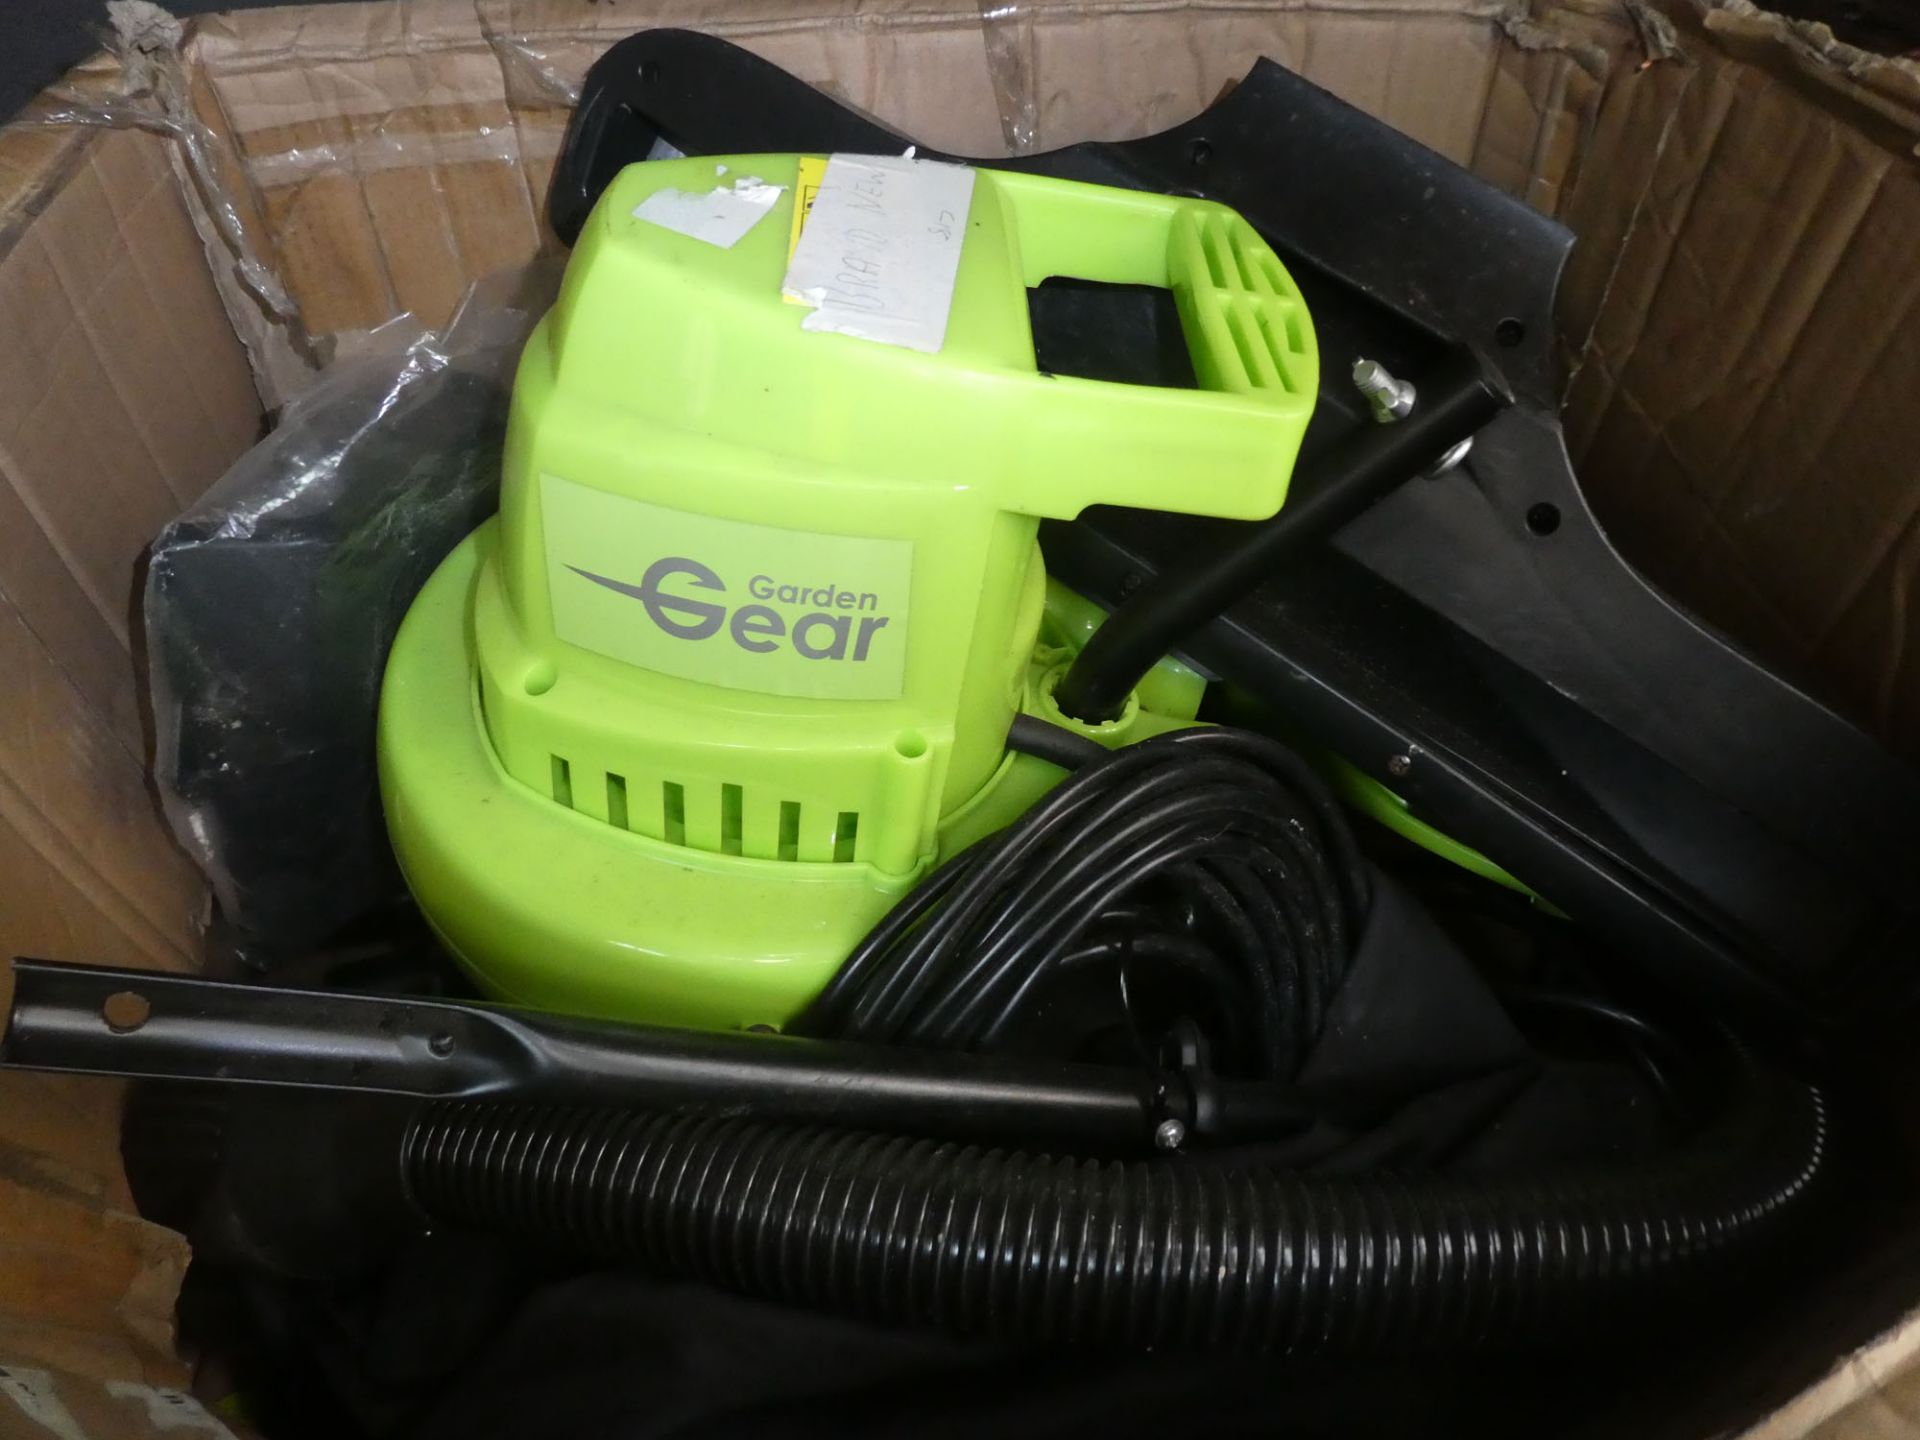 Garden Gear electric blow vac in box